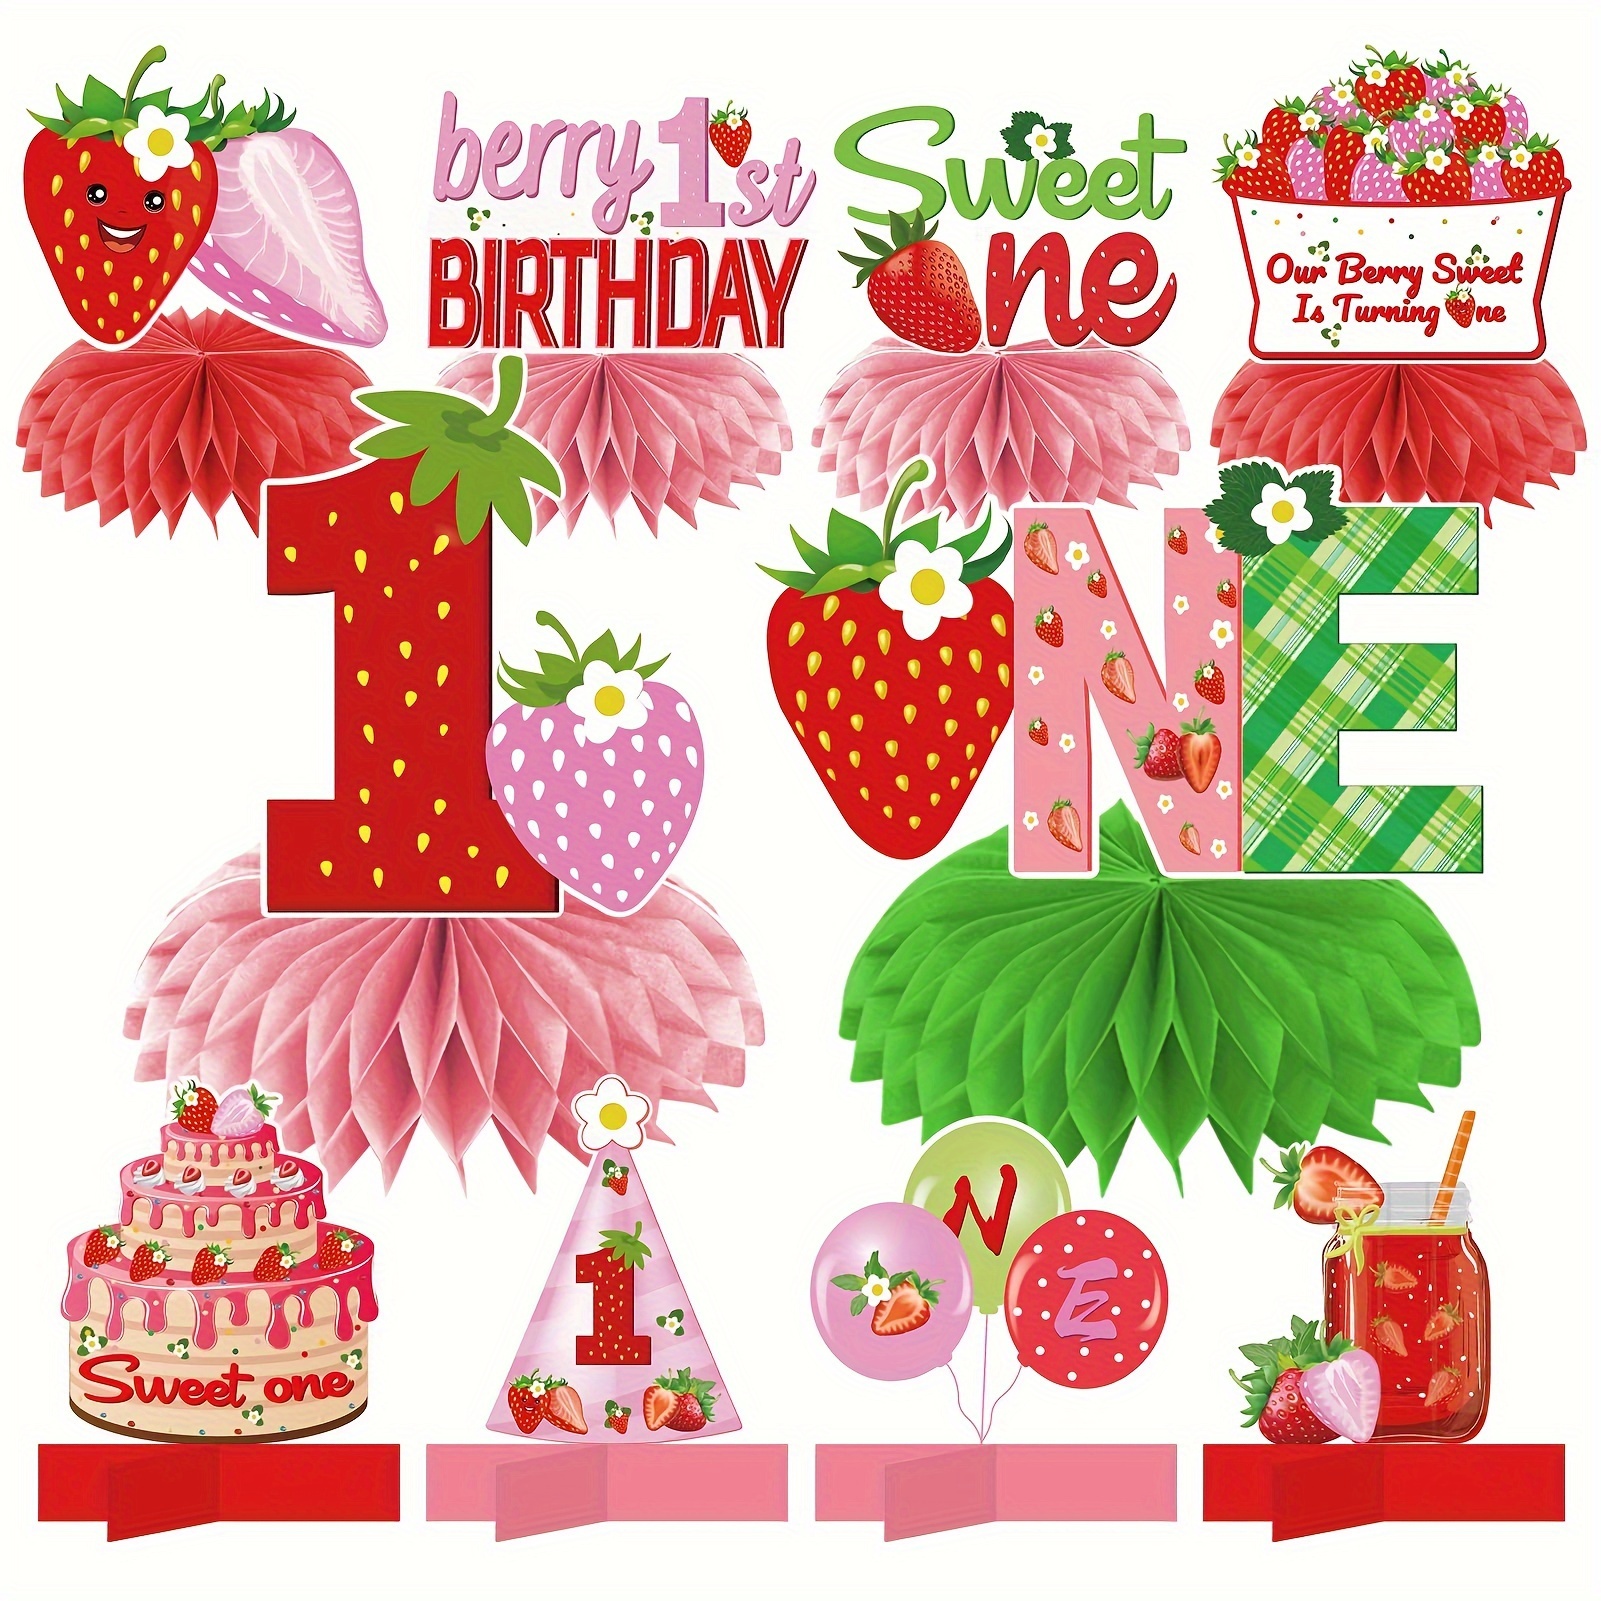 

10pcs, Berry Birthday Decorations Honeycomb Centerpieces, Strawberry Theme Birthday Table Centerpiece, Party Supplies, Berry Sweet Birthday Party Table Topper Decor